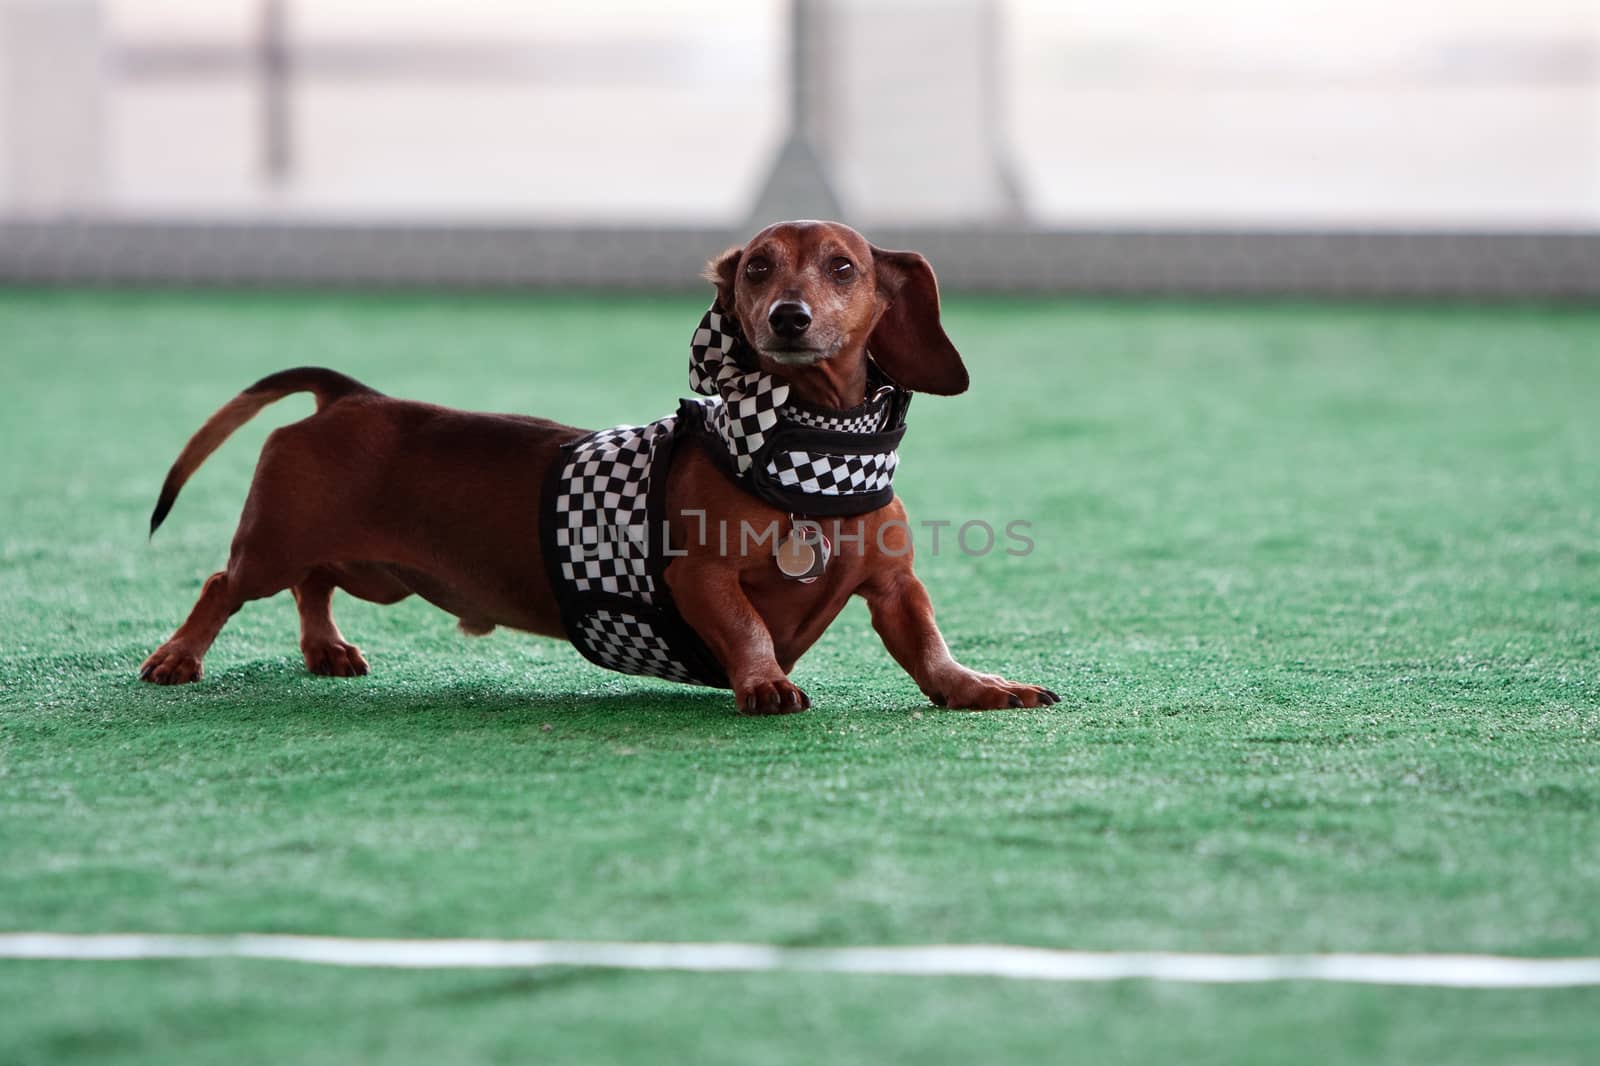 Cute Dachshund Wears Checkered Flag Outfit at Dog Festival by BluIz60